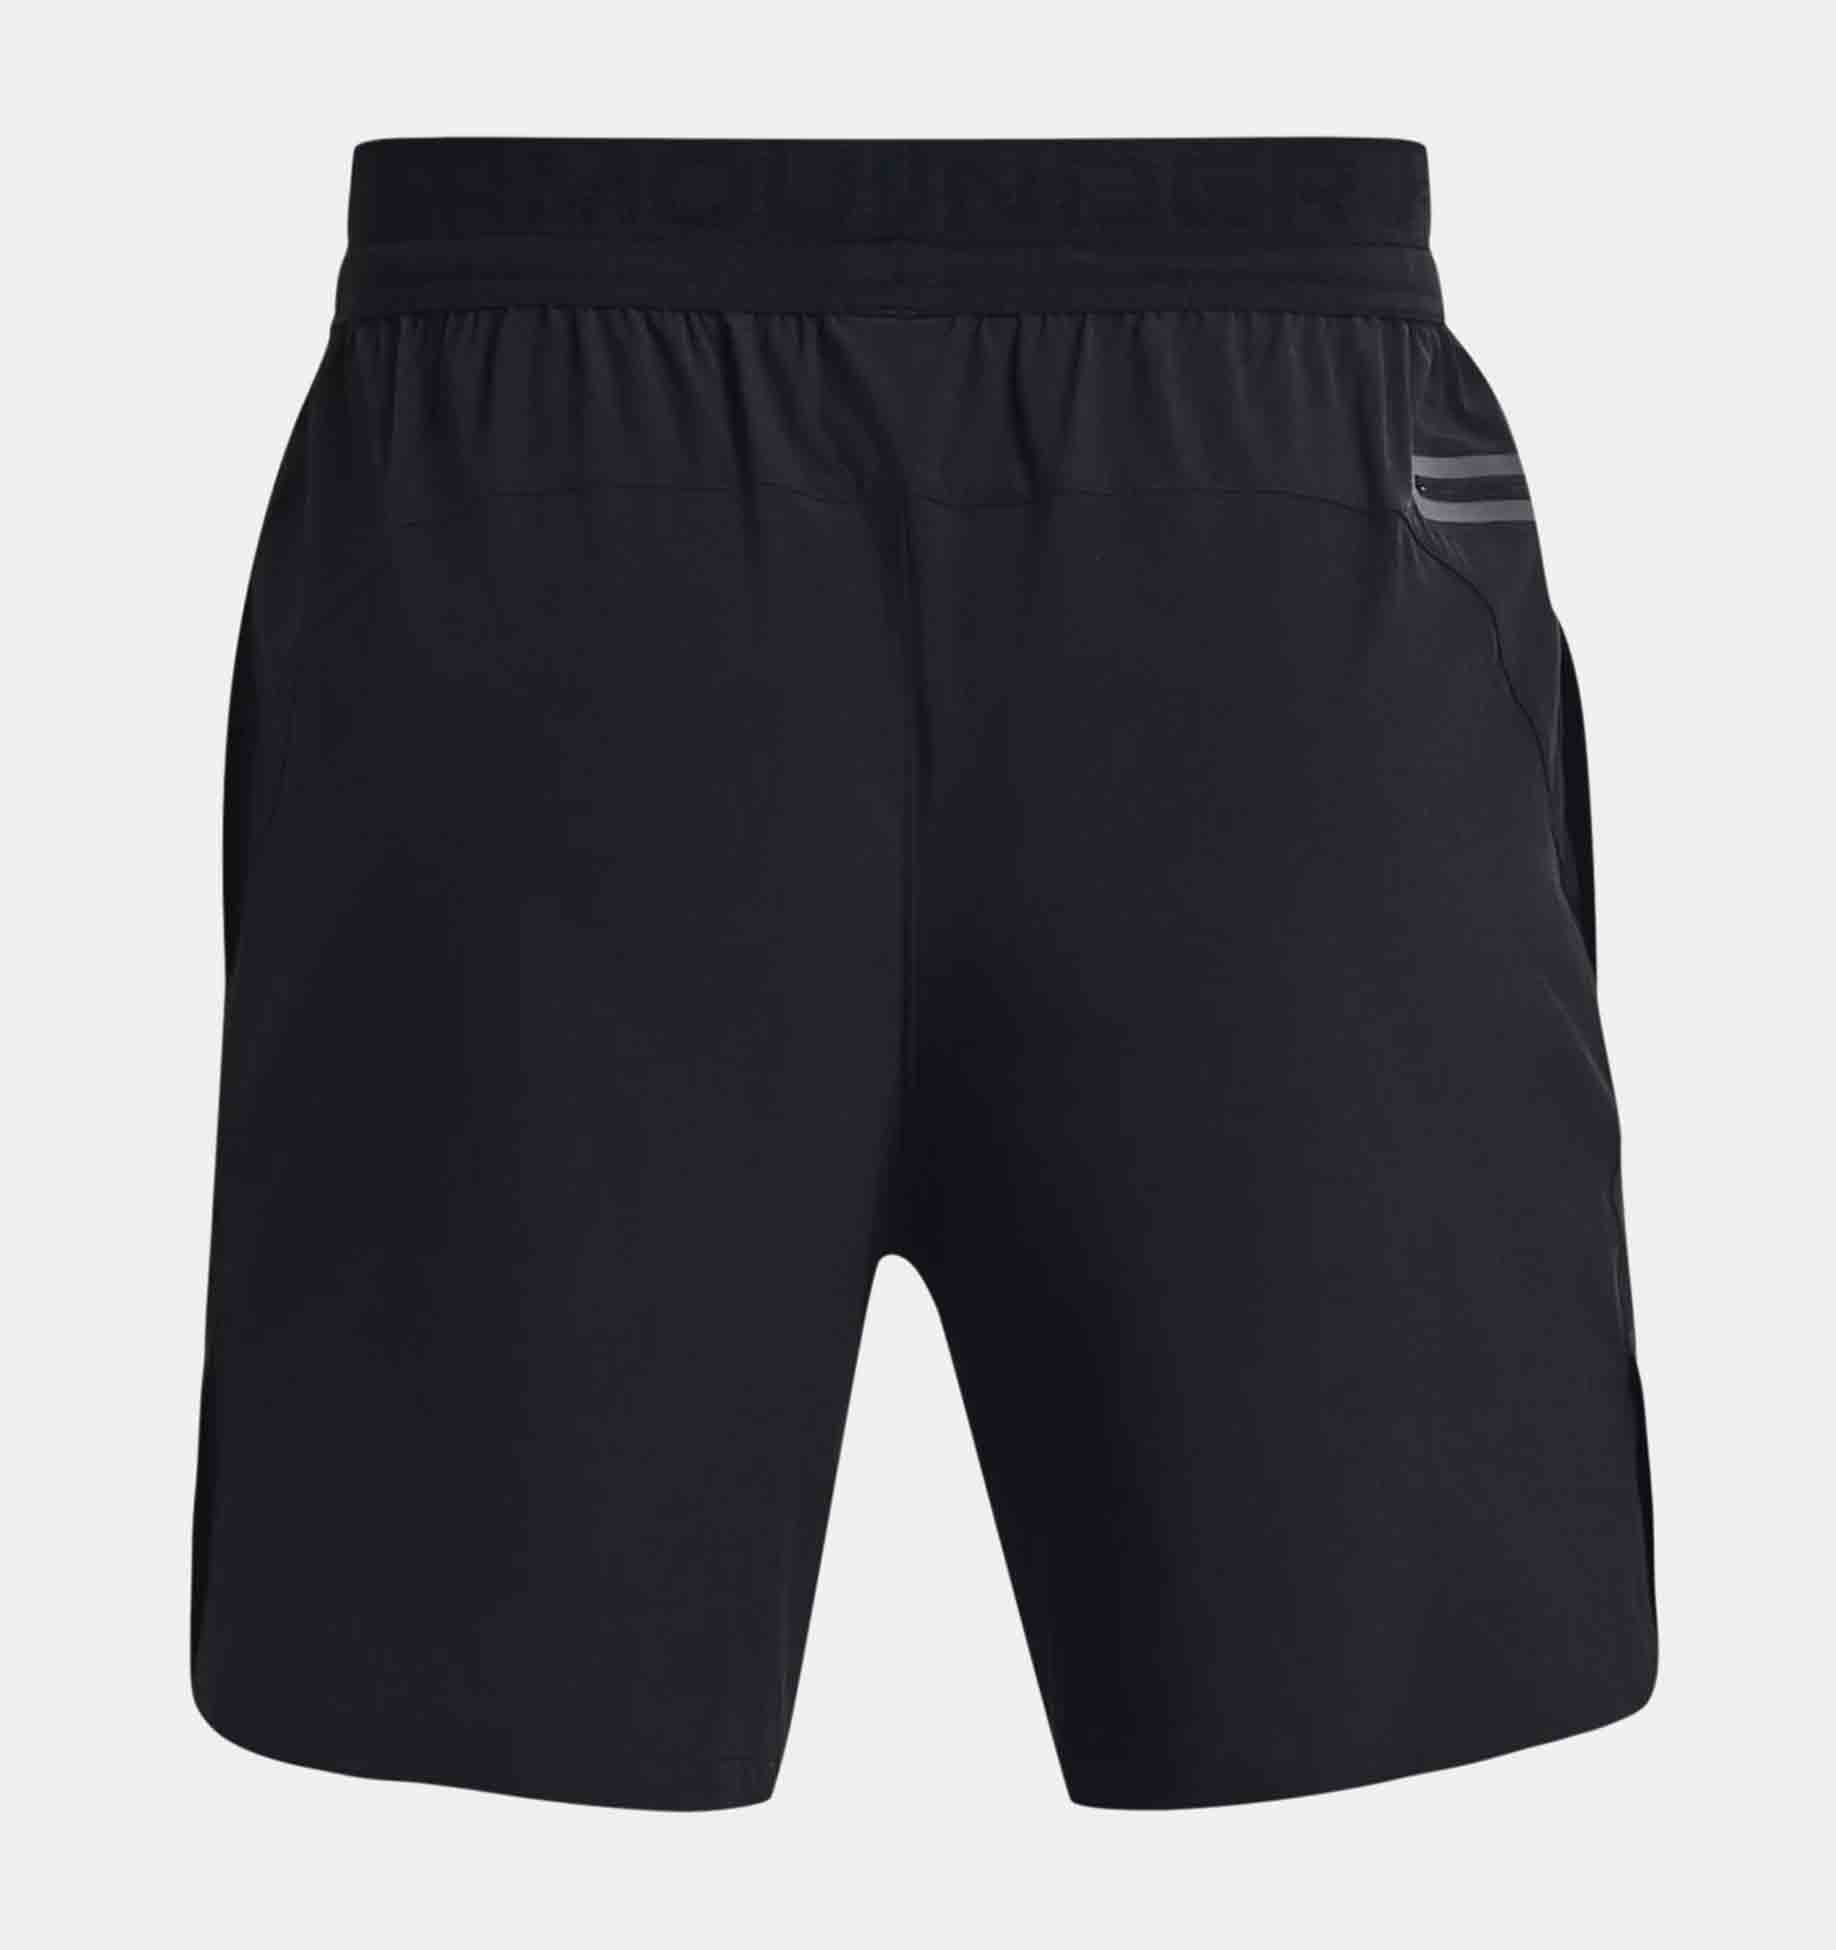 Pantalones cortos UA Peak Woven Sts.